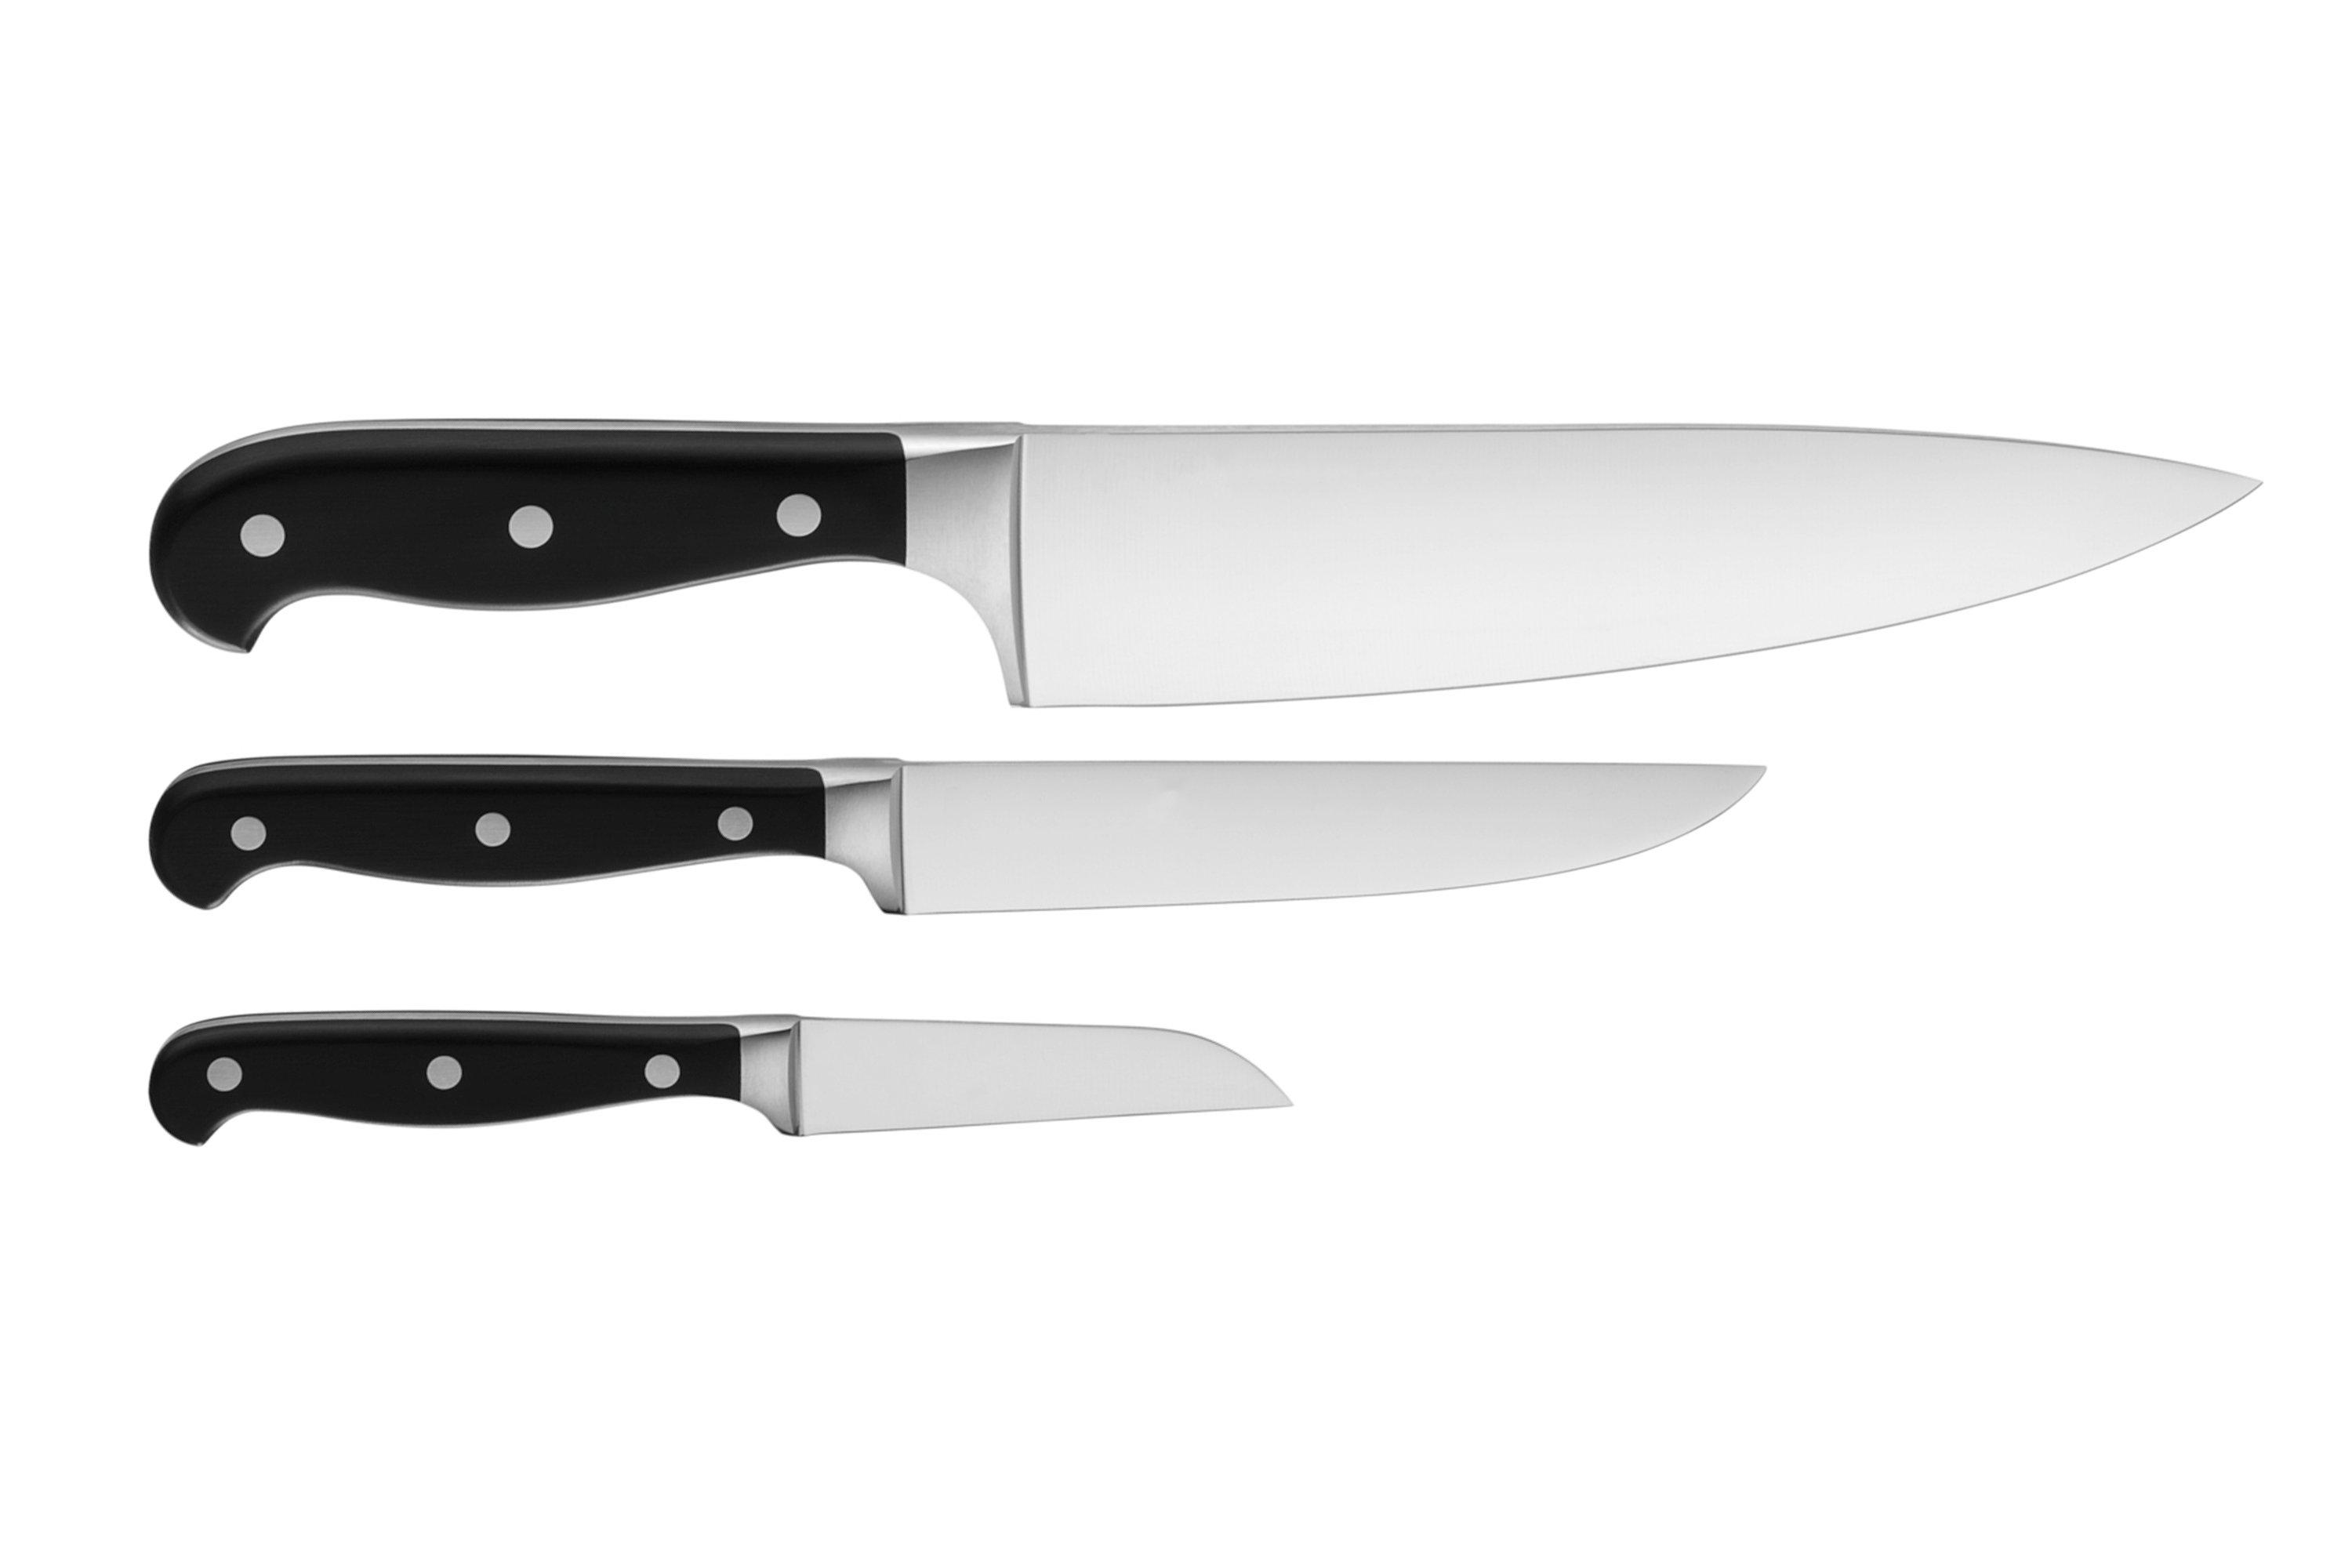 Plus set shopping WMF at Advantageously knife | Spitzenklasse 3-piece 1894919992,